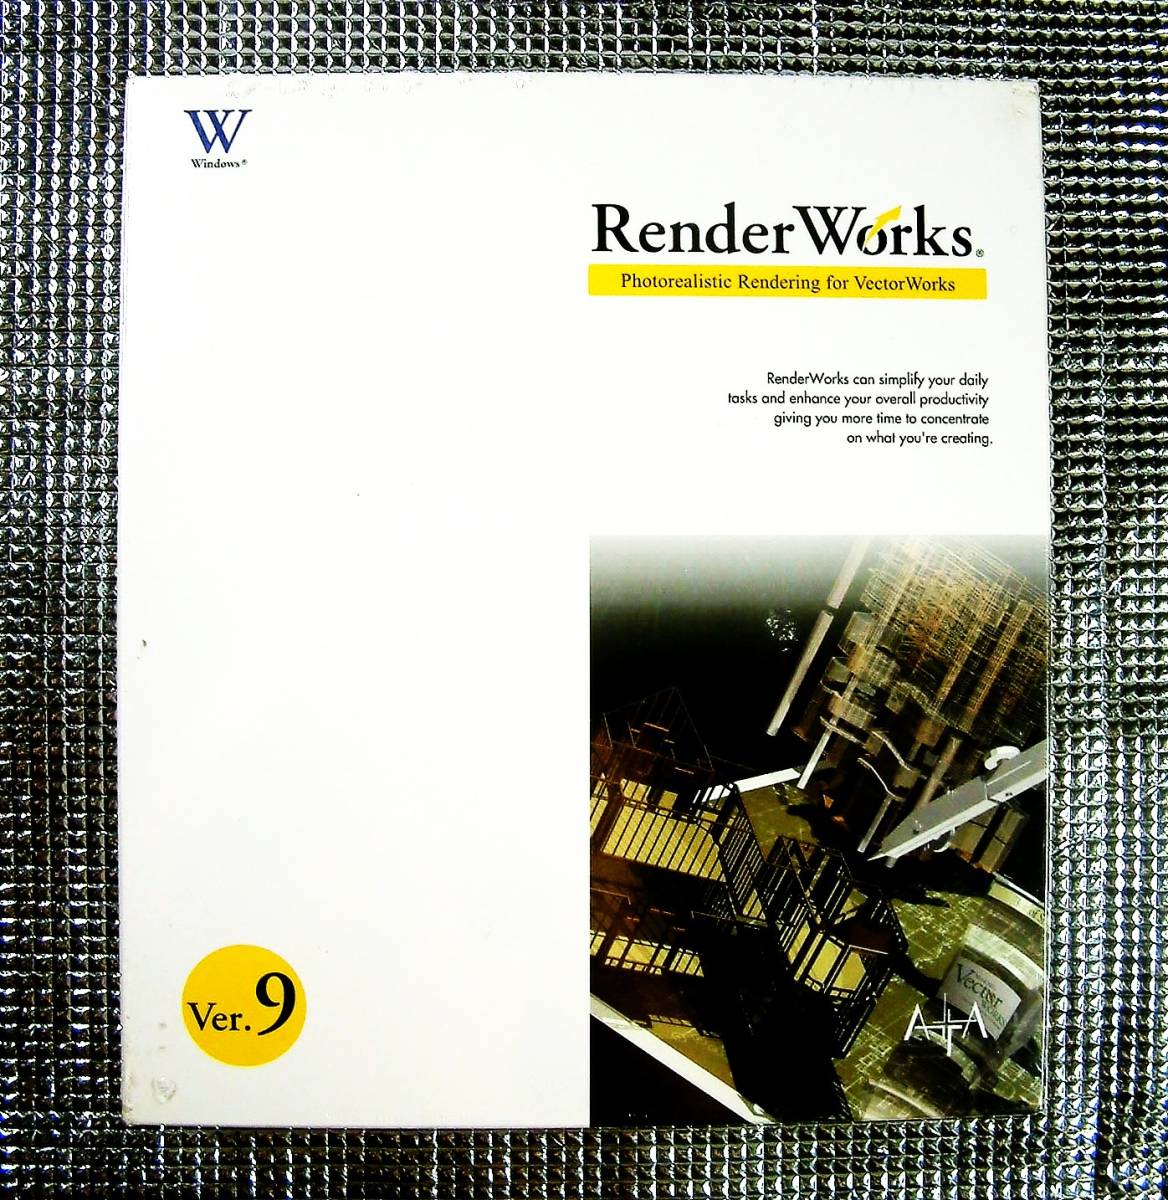 【4115】A&A RenderWorks 9 Windows版 未開封品 エーアンドエー レンダーワークス VectorWorks(ベクターワークス)用レンダリング CG生成